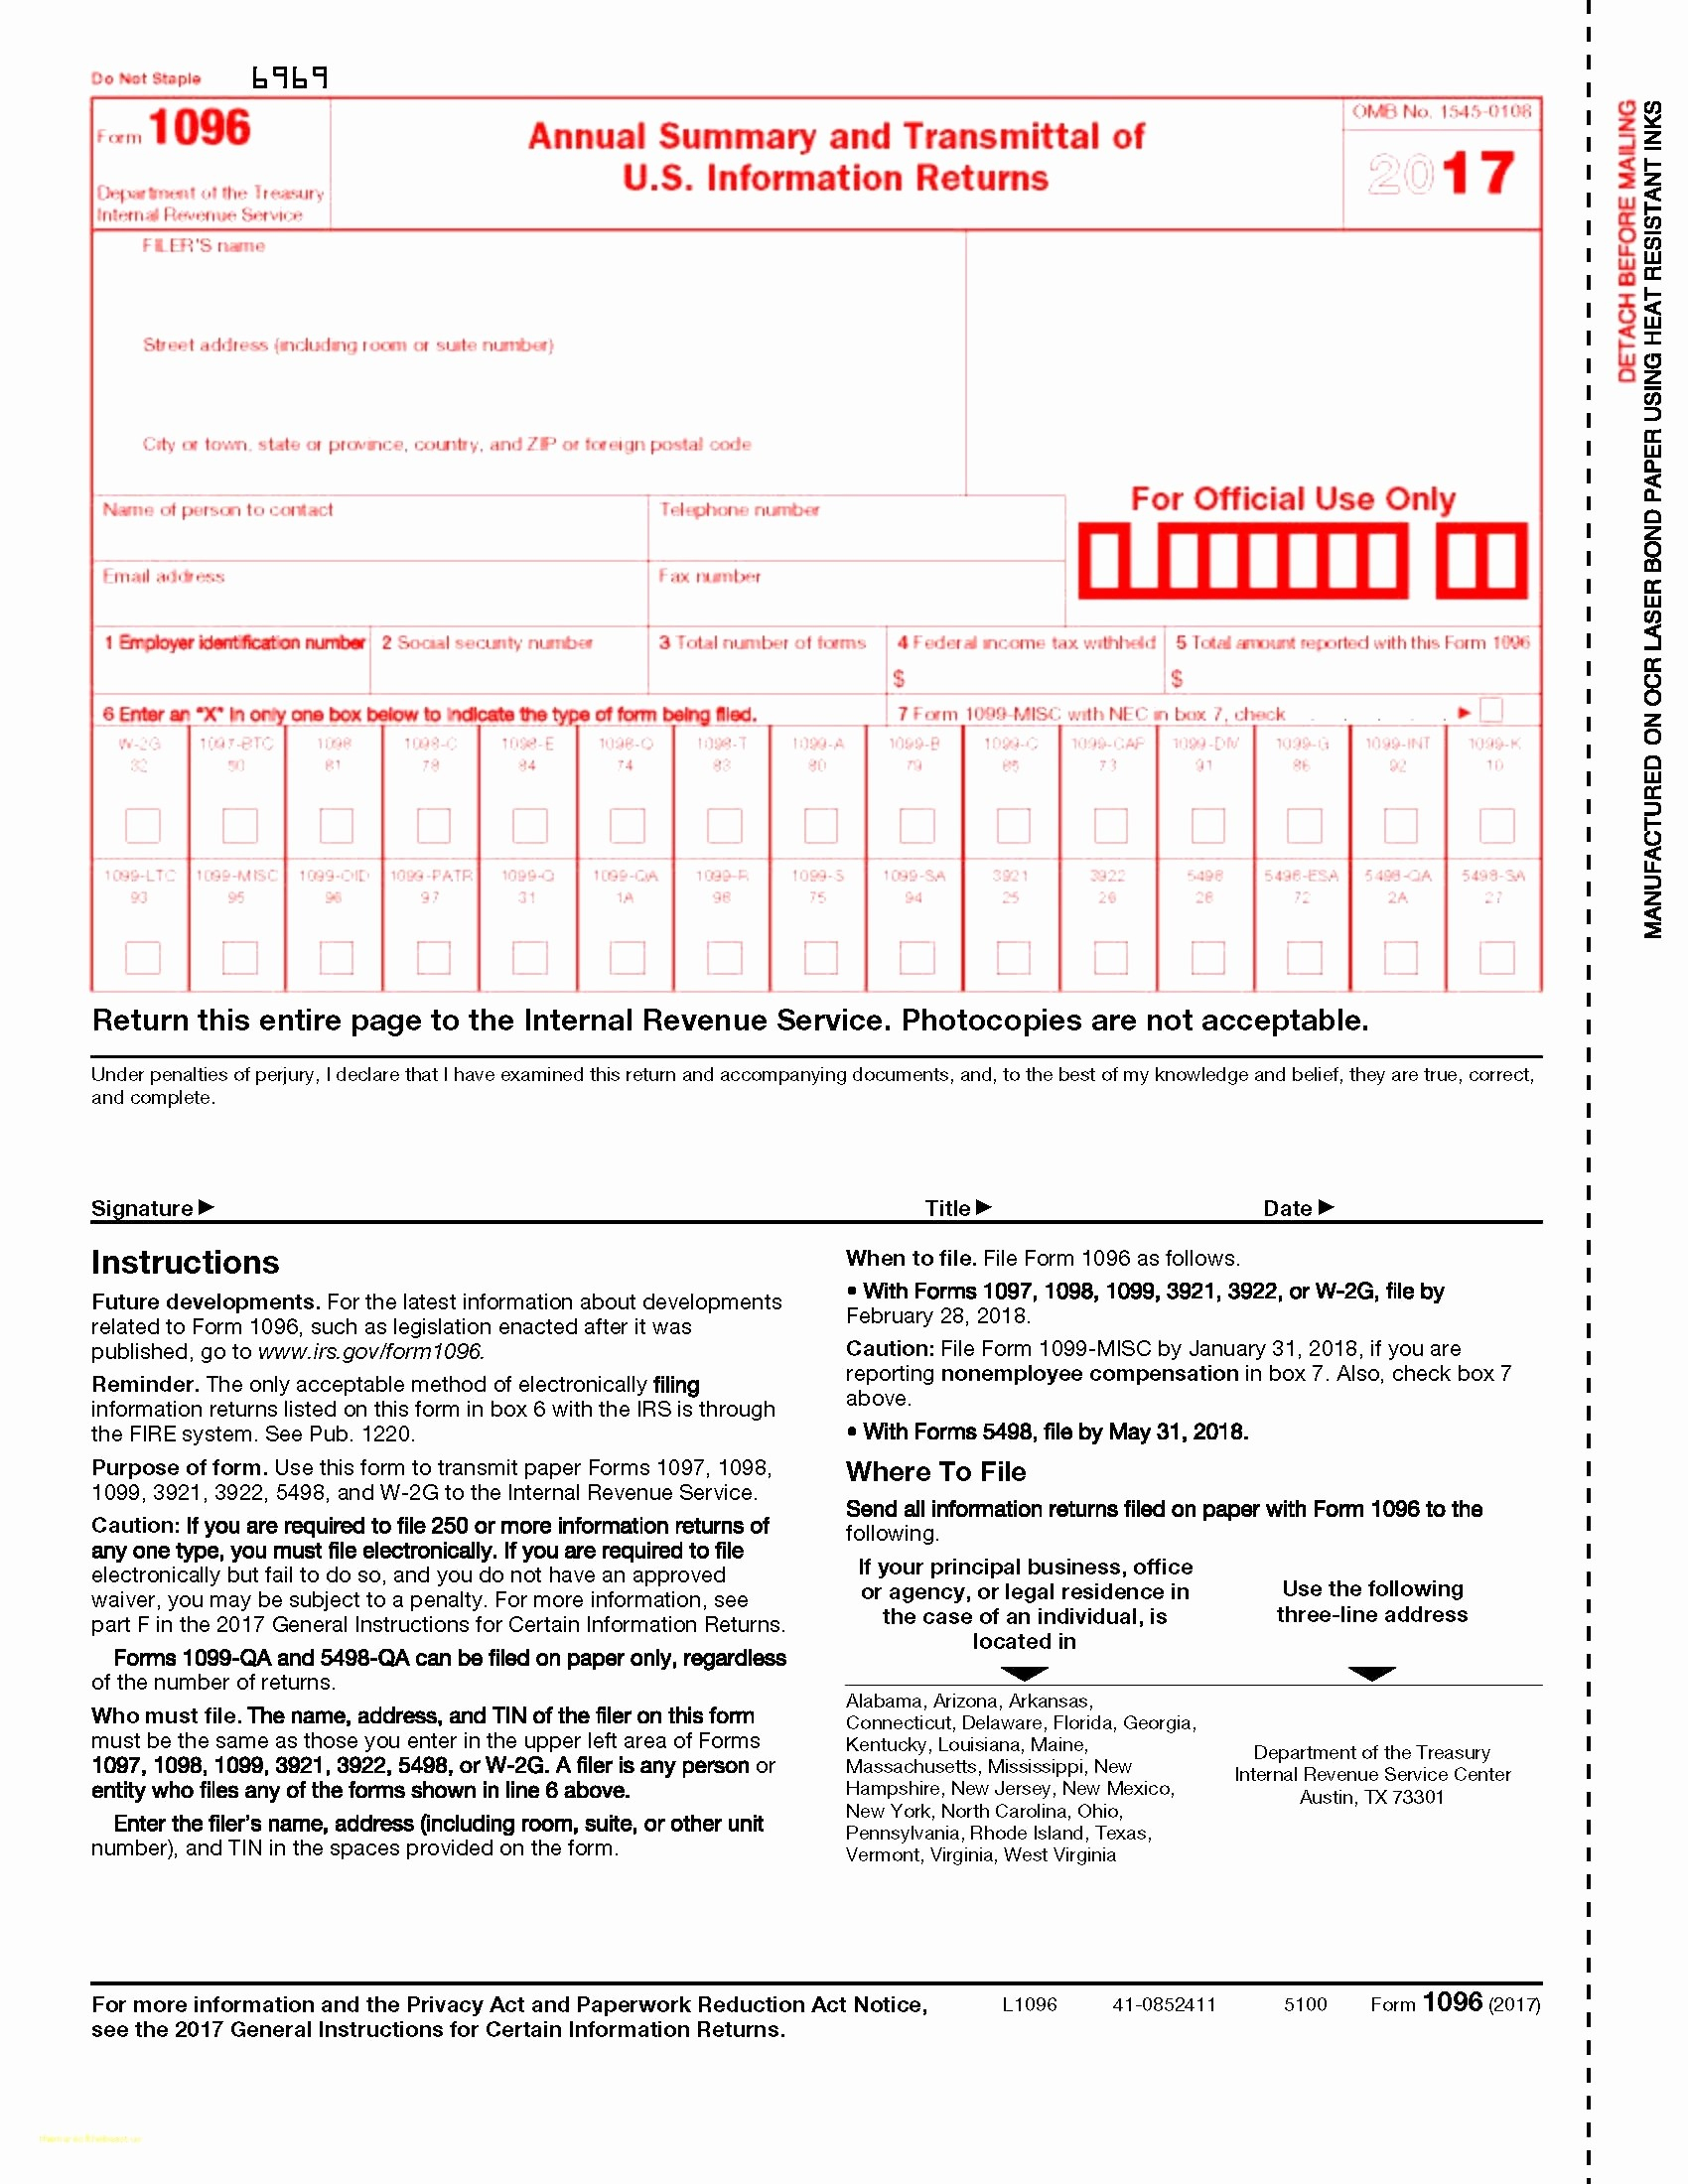 Free Printable 1096 Form 2015 Form 1096 Template 2015 Fresh Irs Form - Free Printable 1096 Form 2015